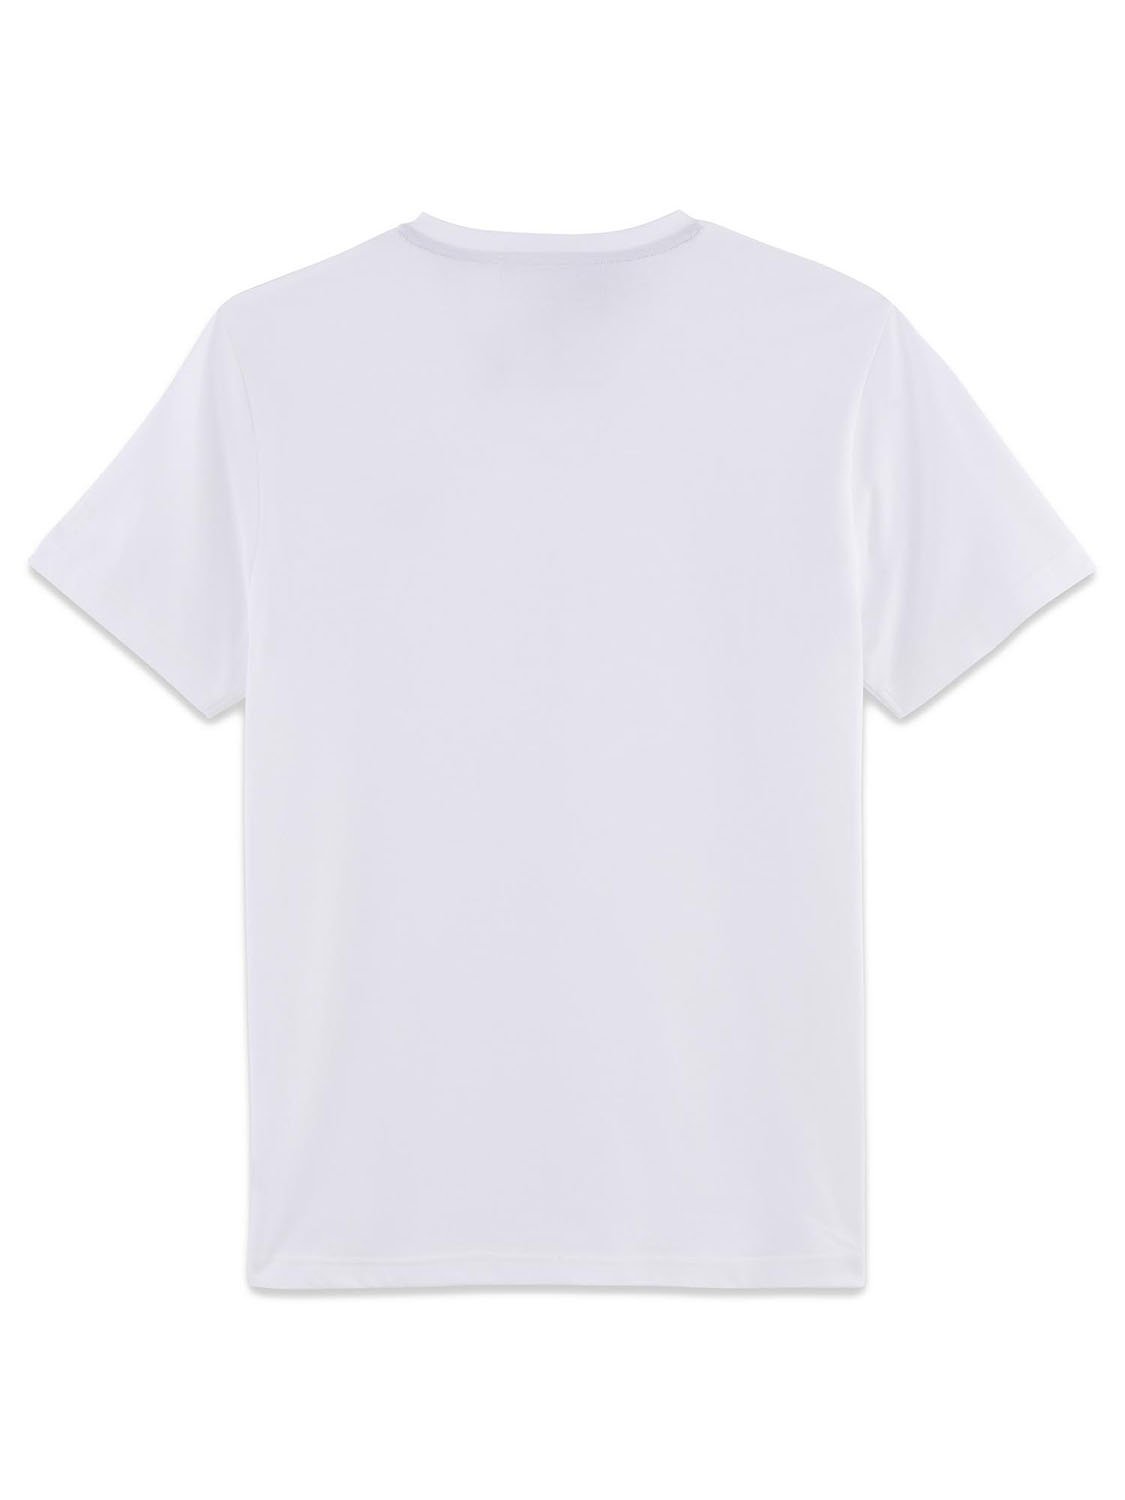 Tee-Shirt Homme Col V Coton Biologique Blanc